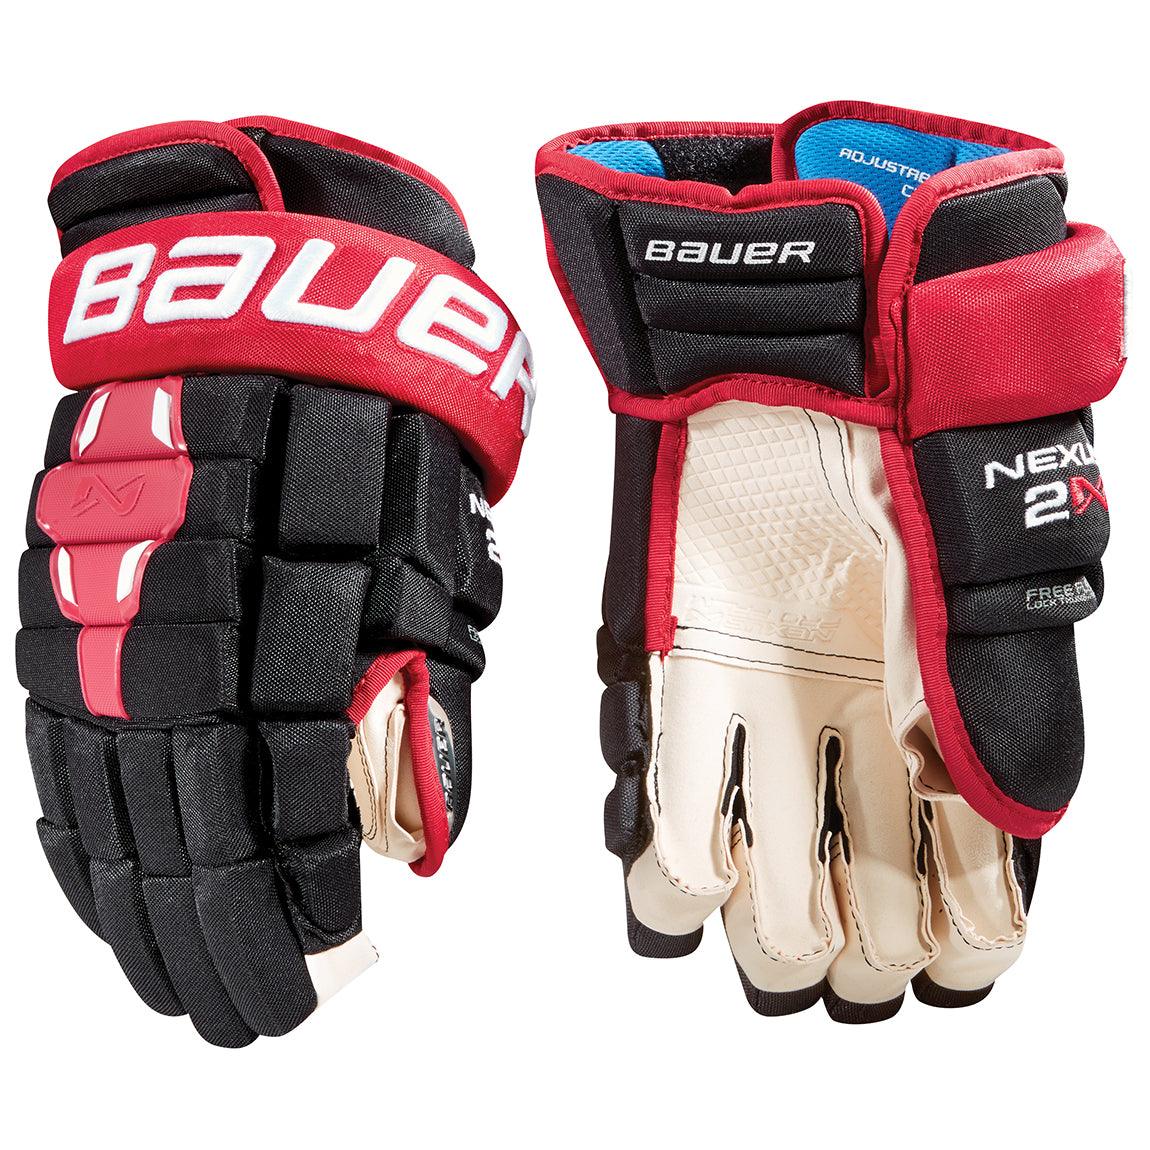 Nexus 2N Hockey Gloves - Senior - Sports Excellence